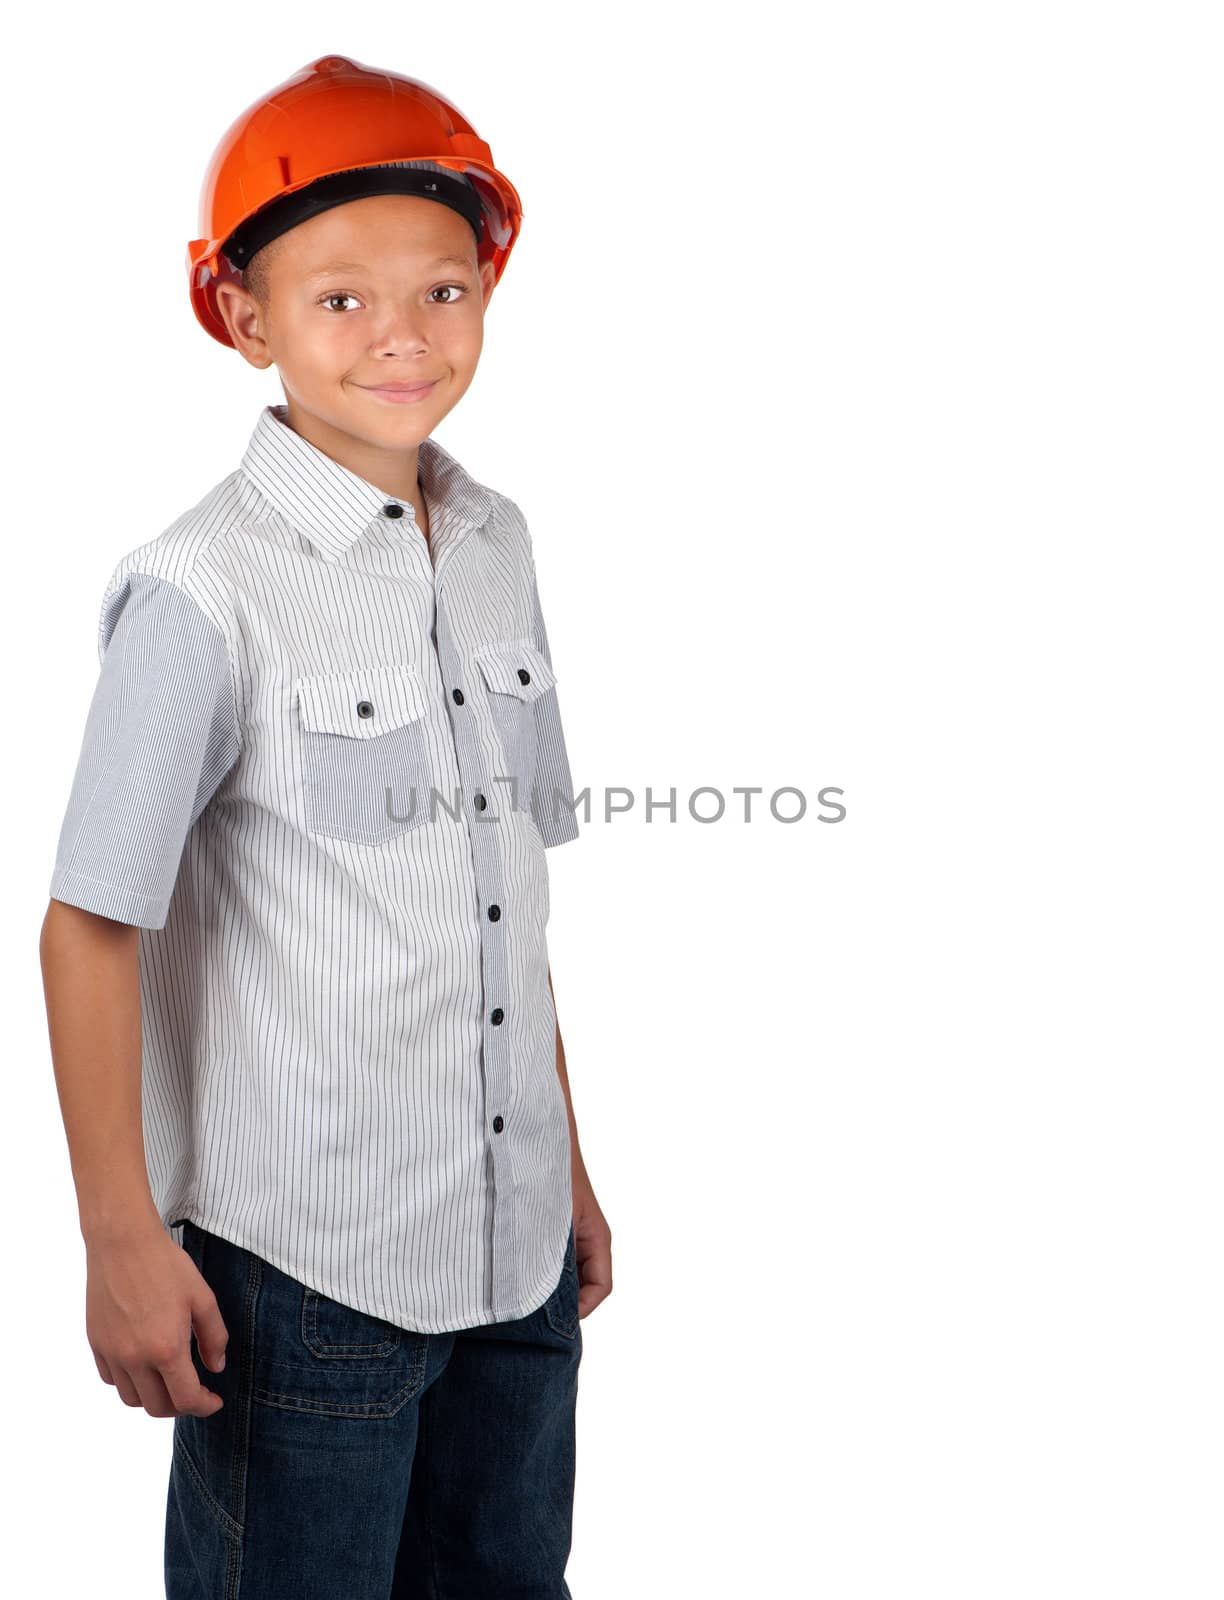 Boy with hard hat by Zafi123